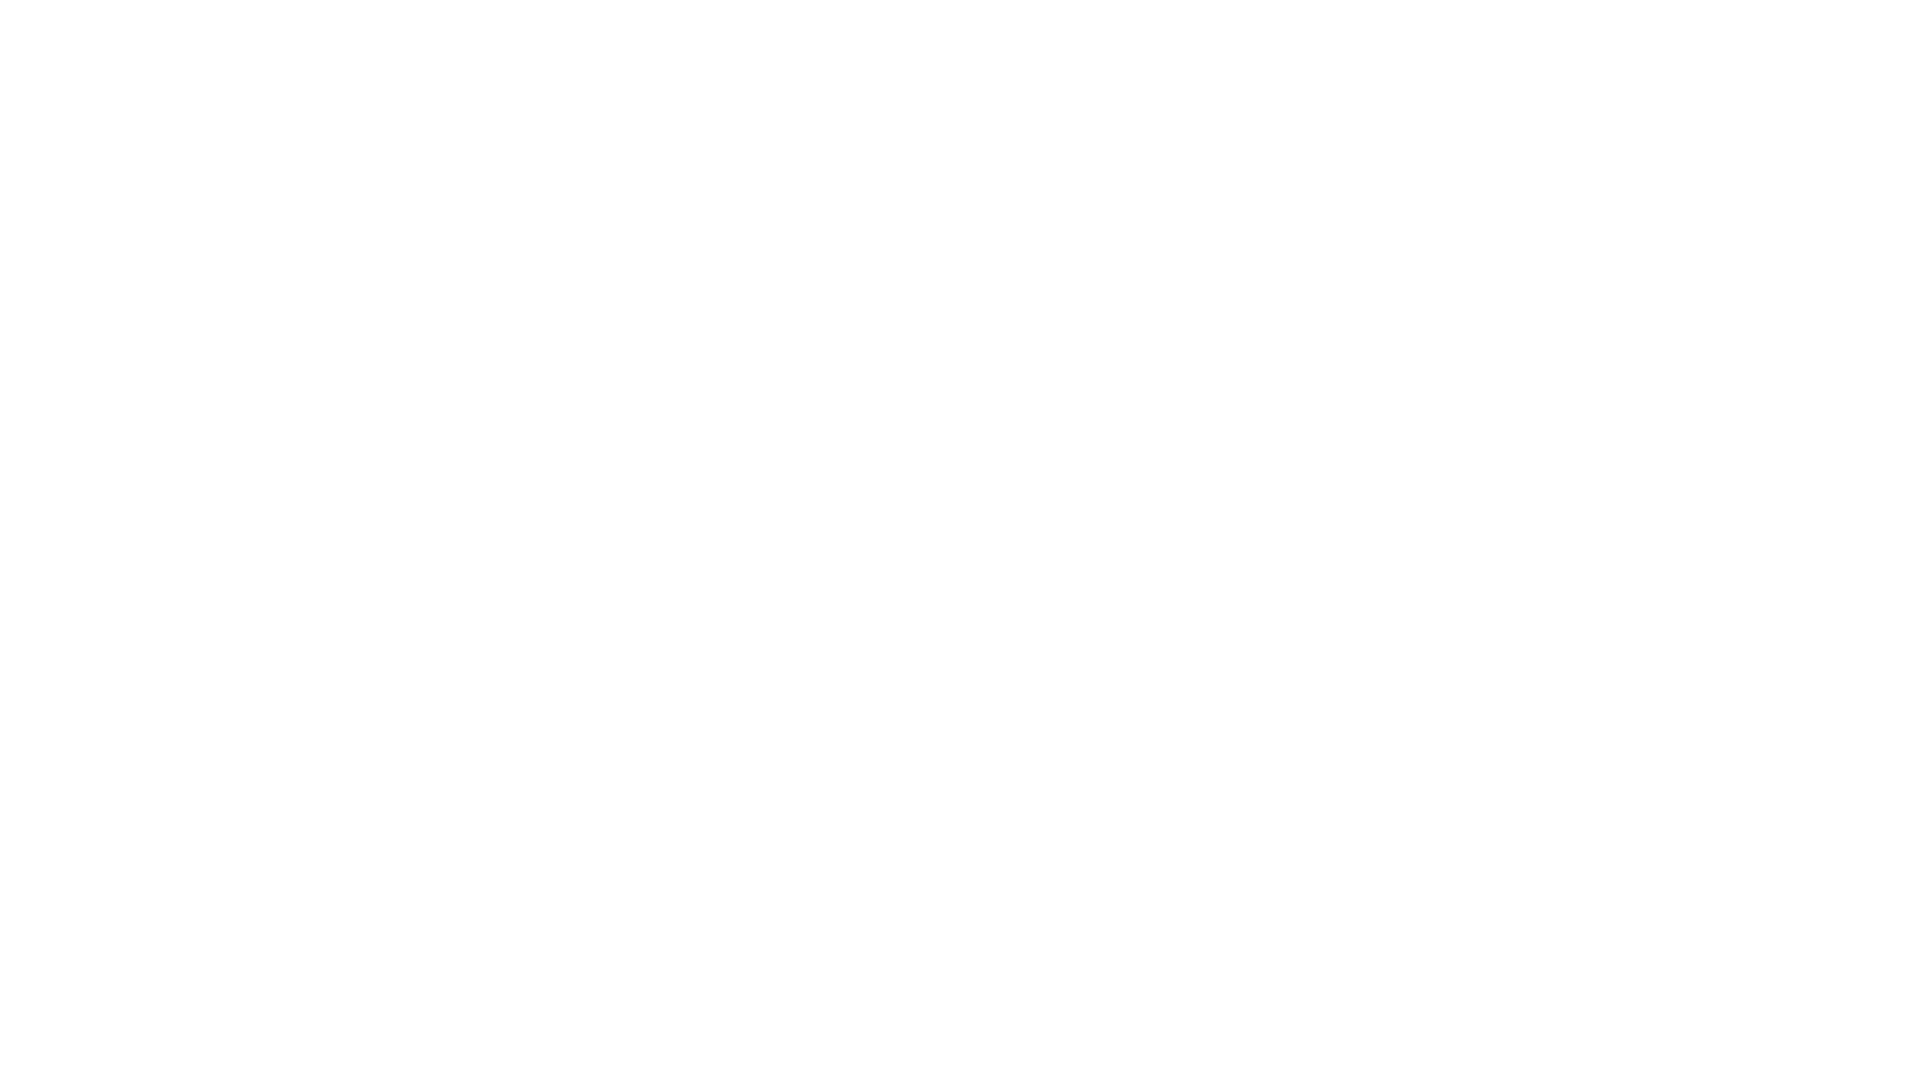 Akanda Adventures